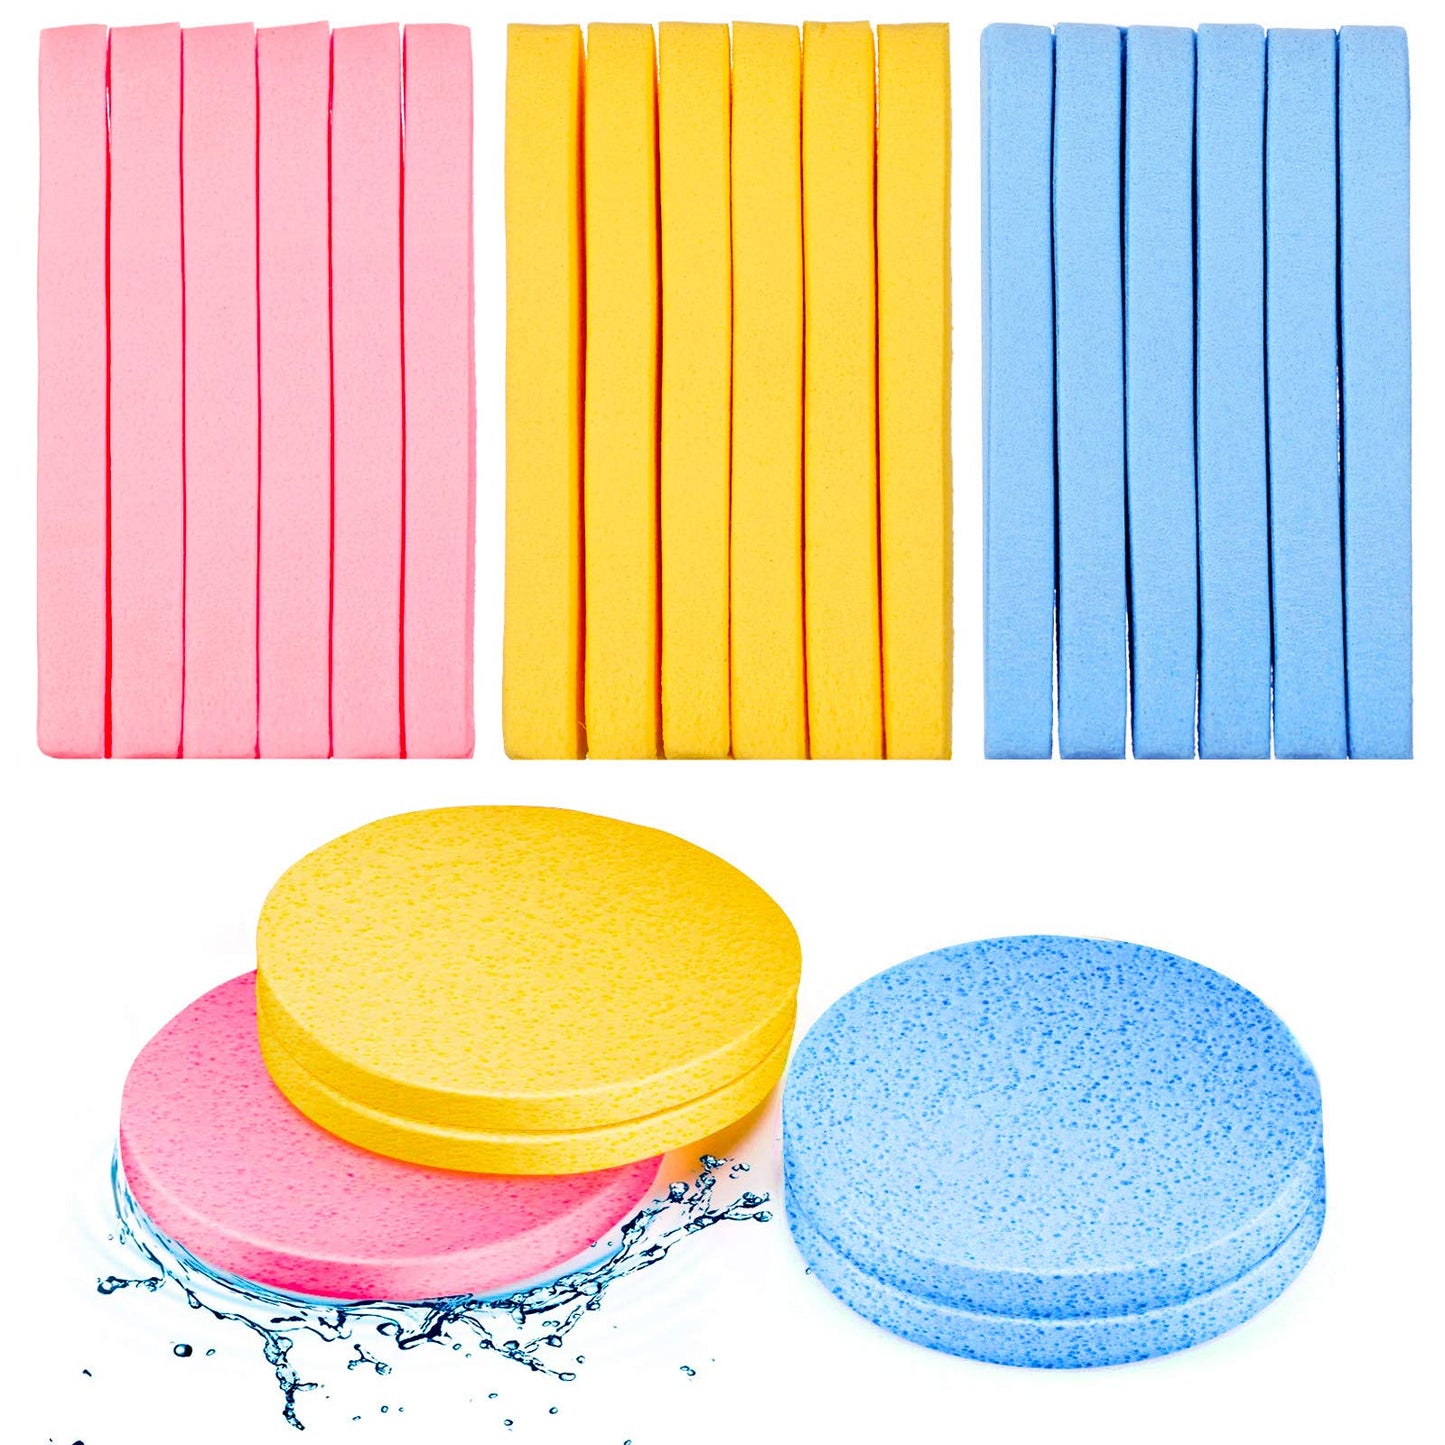 120 Pieces Compressed Facial Sponge for Estheticians Face Cleansing Sponge Makeup Removal Sponge Pad Exfoliating Spa Wash Round Face Sponge (Pink, Yellow, Blue)